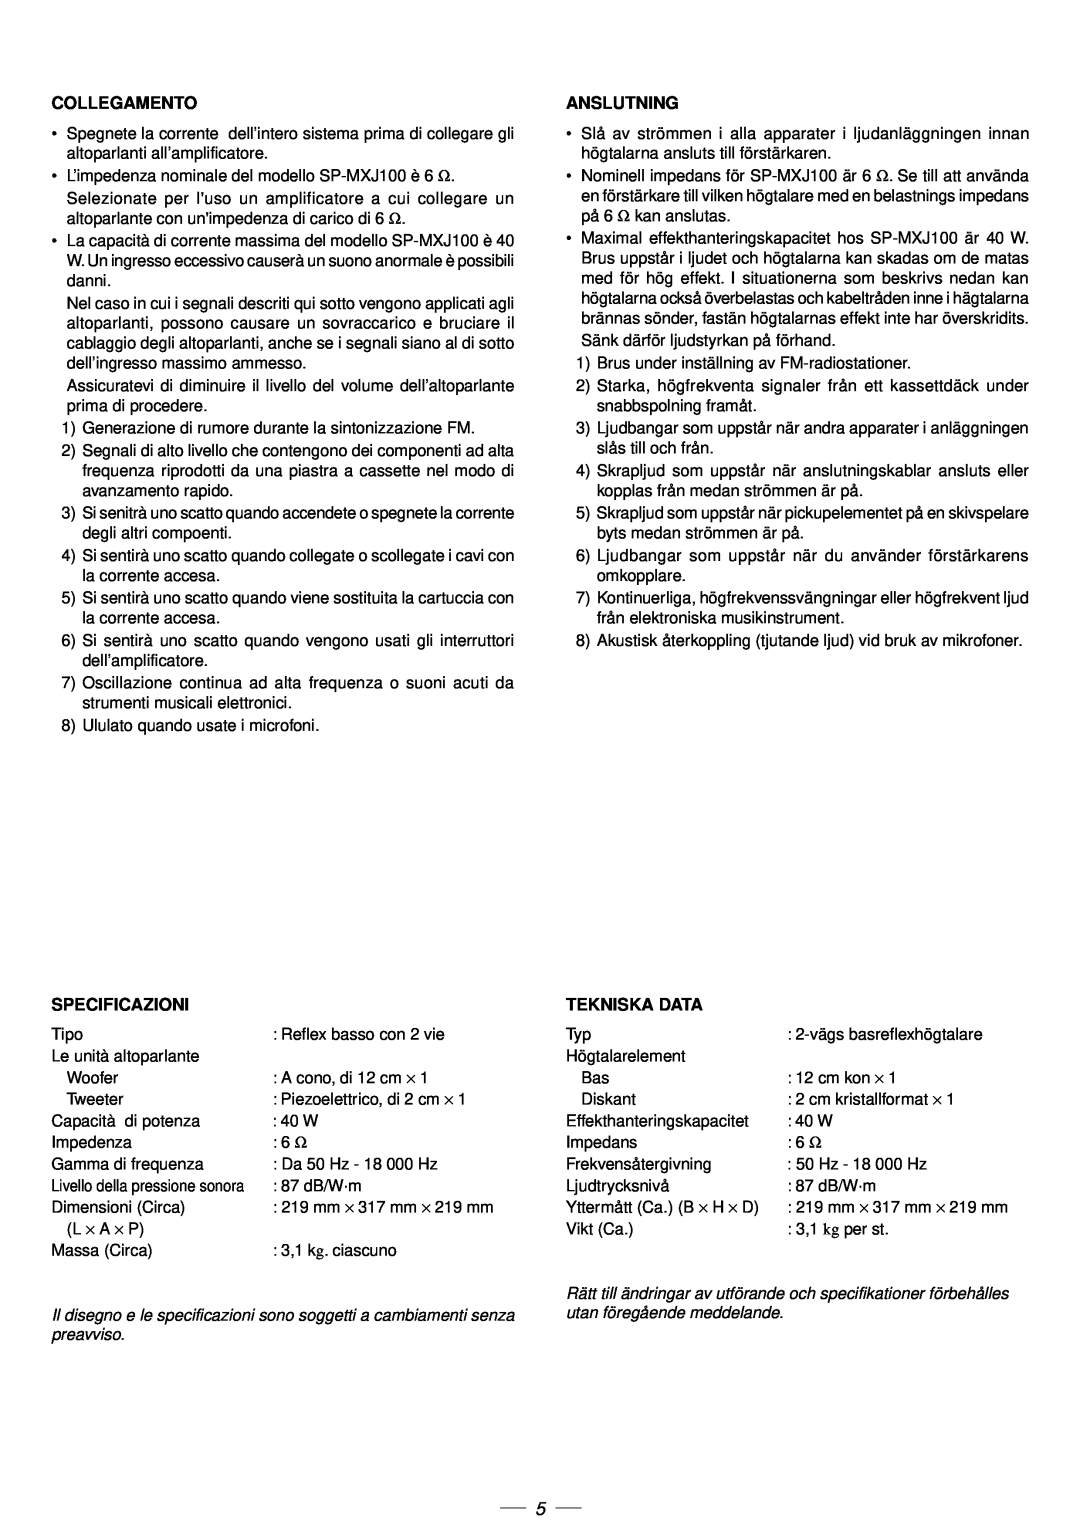 JVC CA-MXJ100 manual Collegamento, Anslutning, Specificazioni, Tekniska Data 